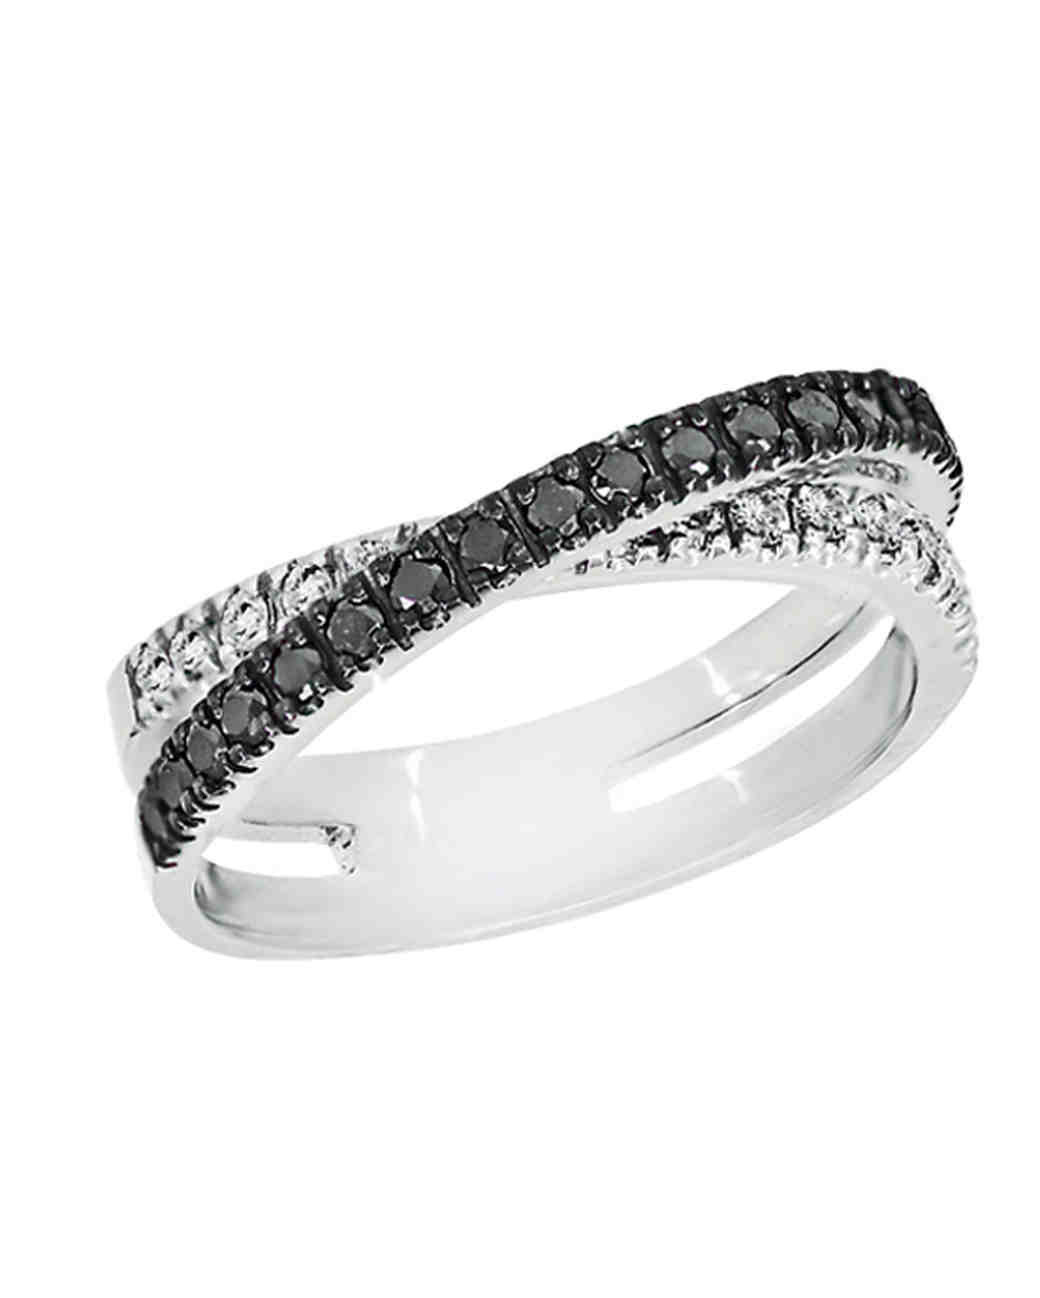 Wedding Rings Black Diamond
 The New LBD The Little Black Diamond Engagement Ring